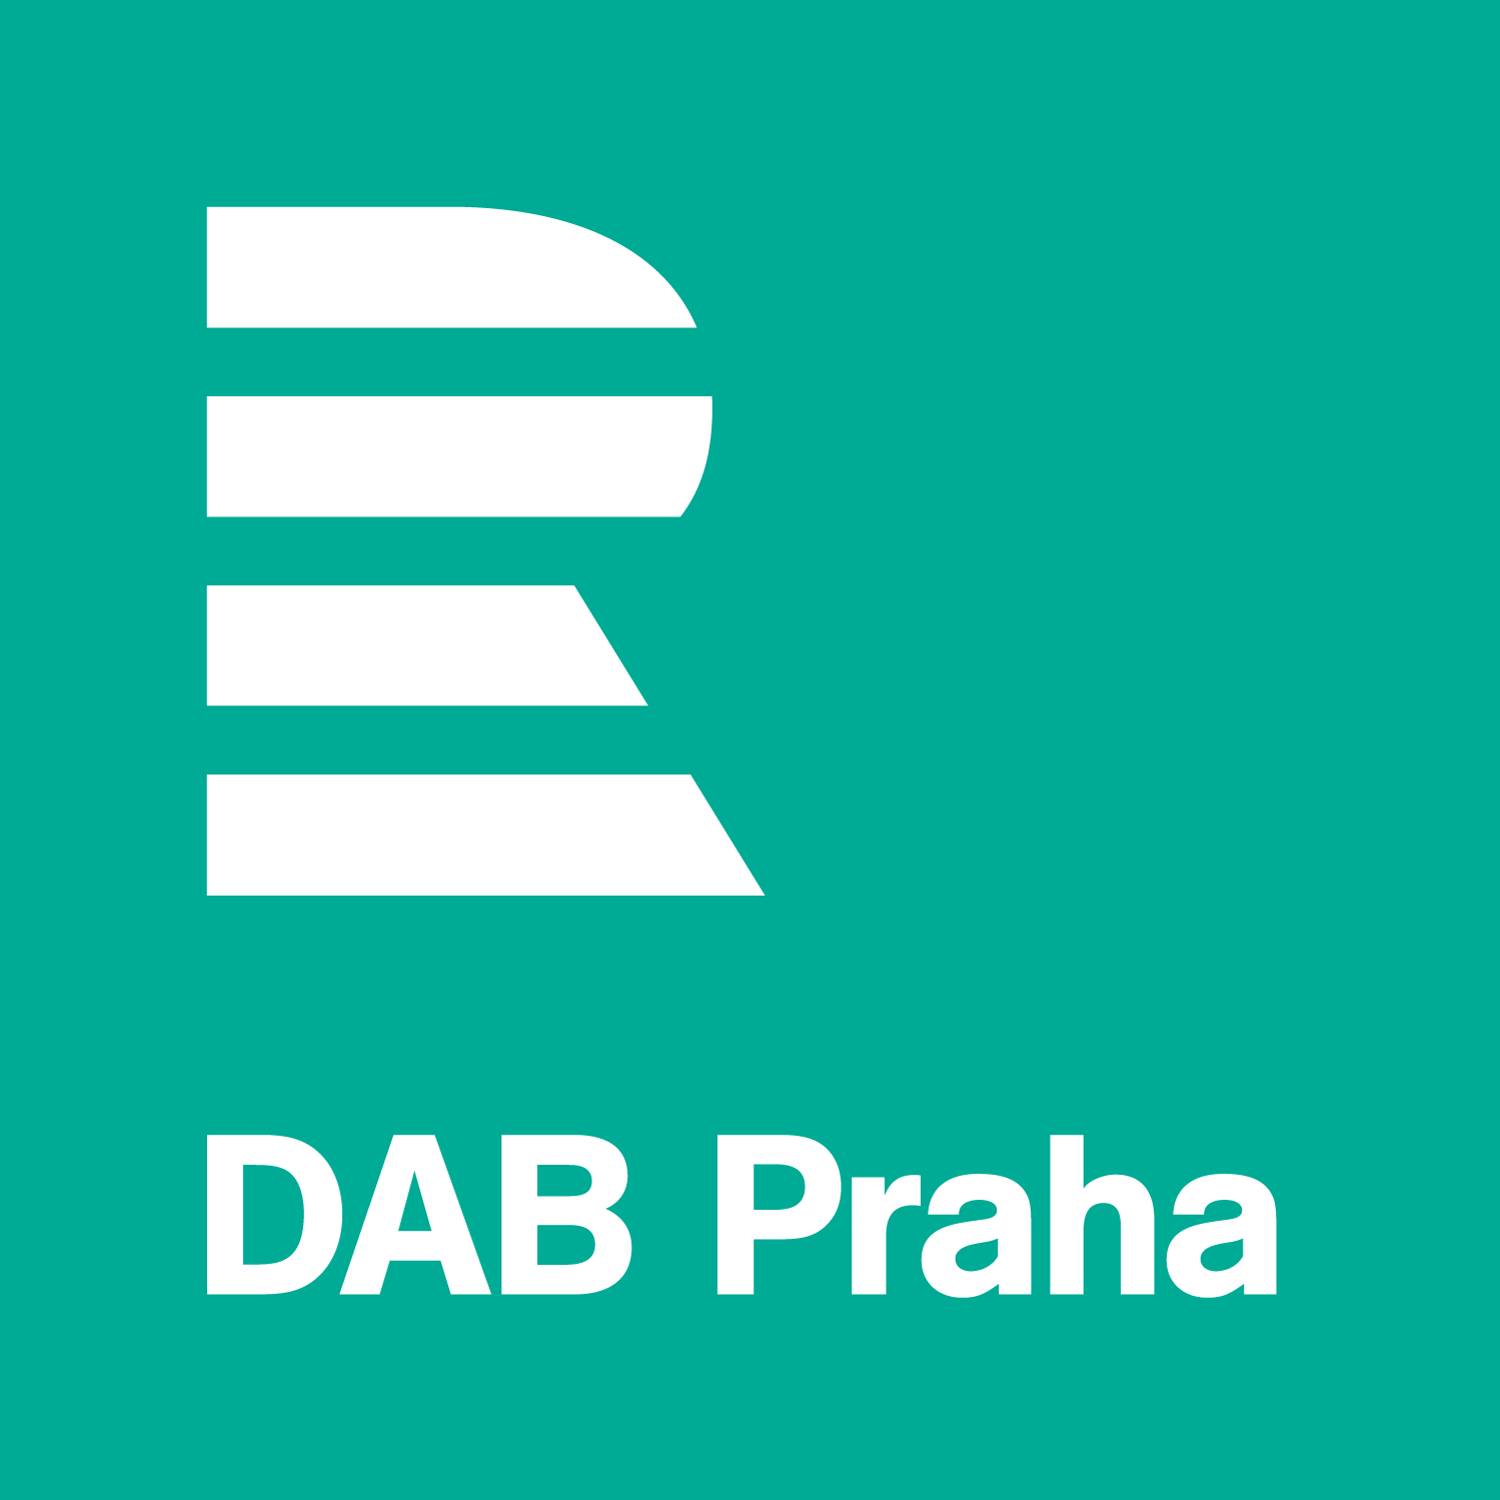 Rádio DAB Praha